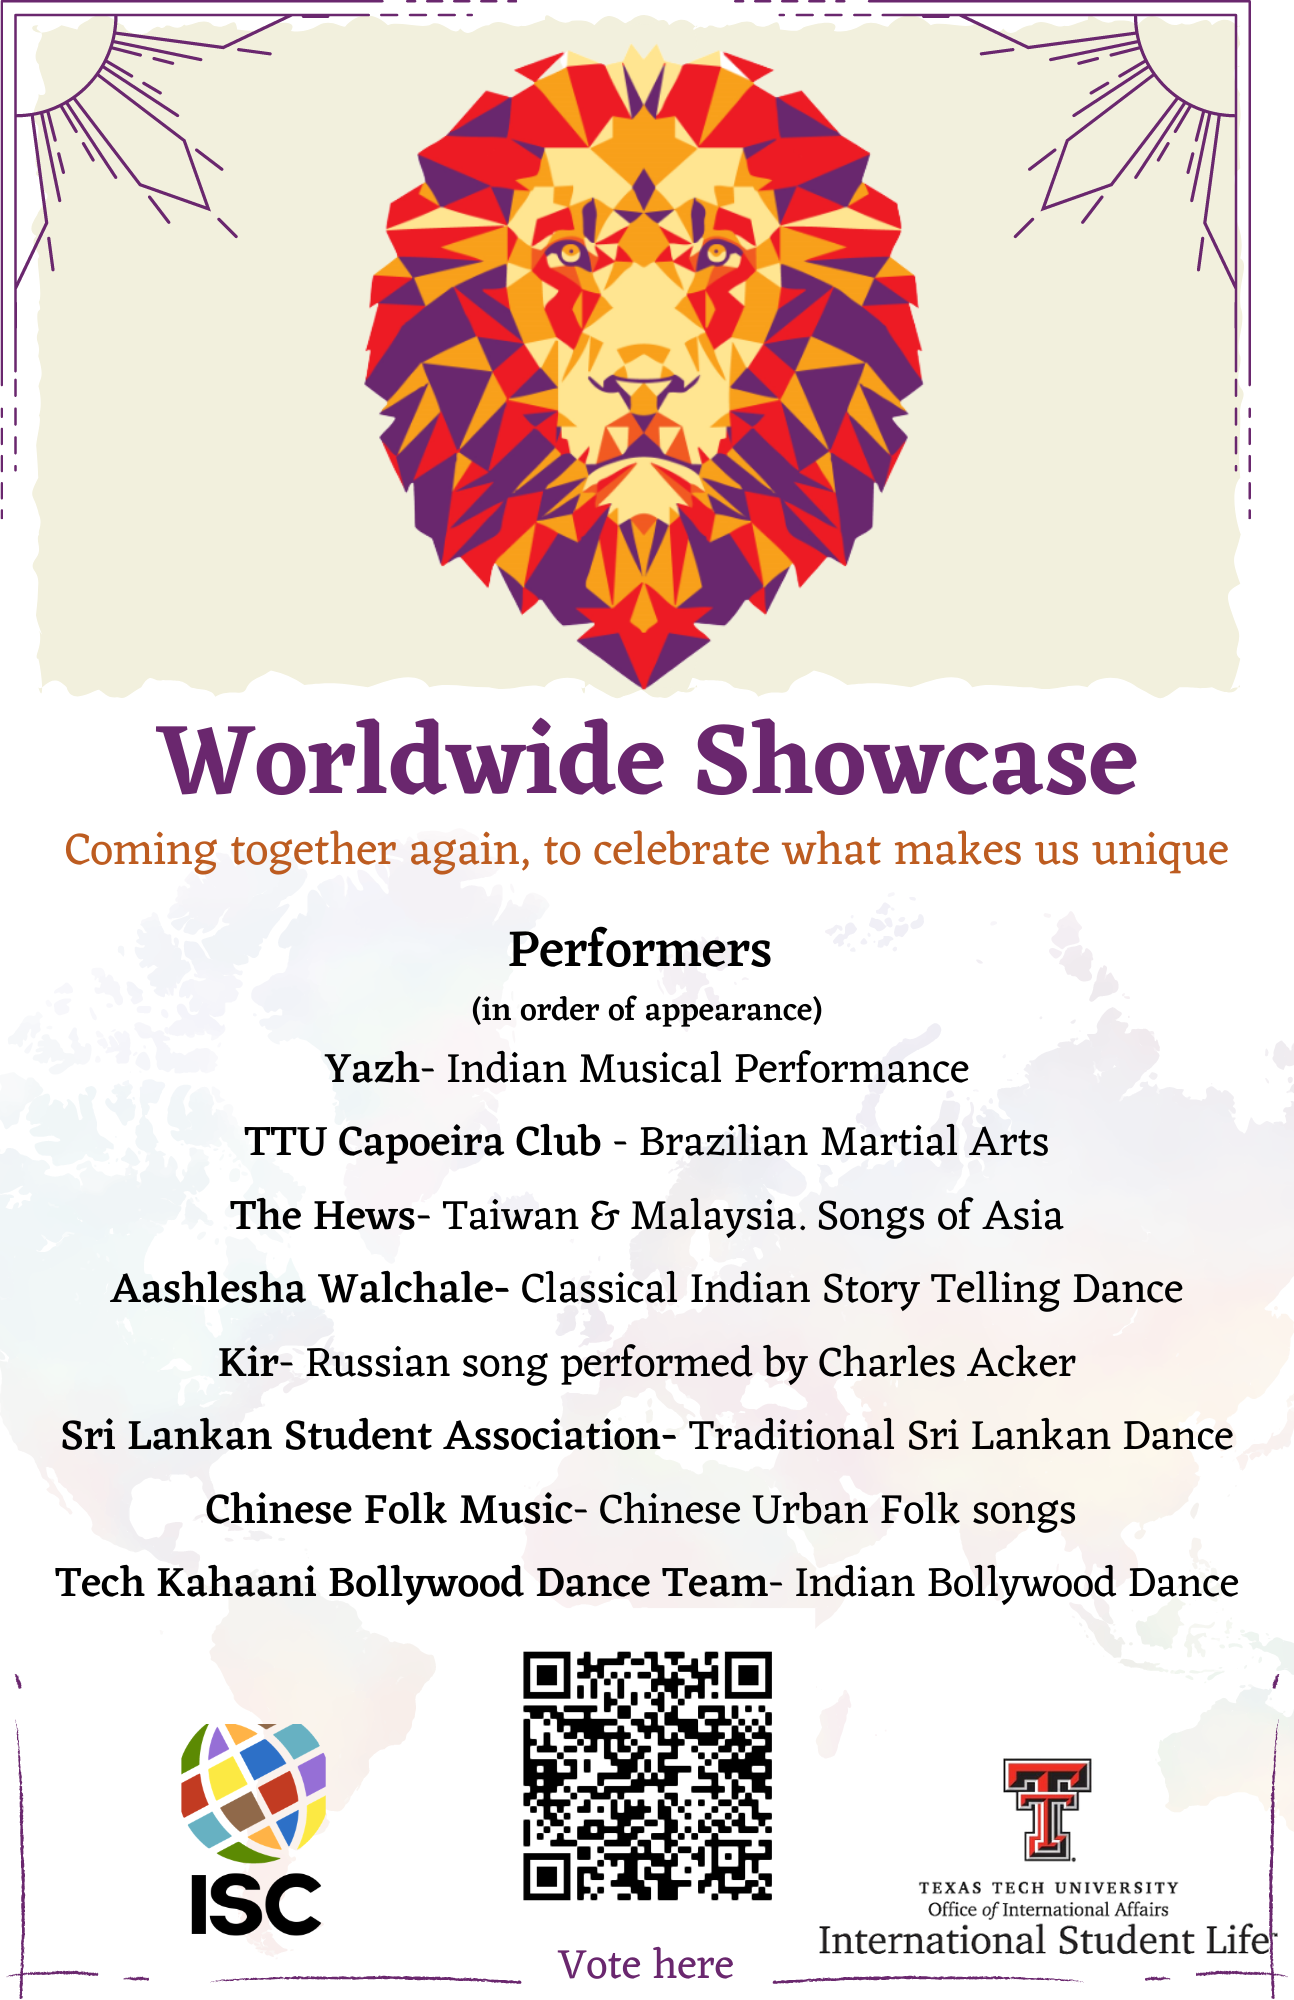 Worldwide Showcase Flyer